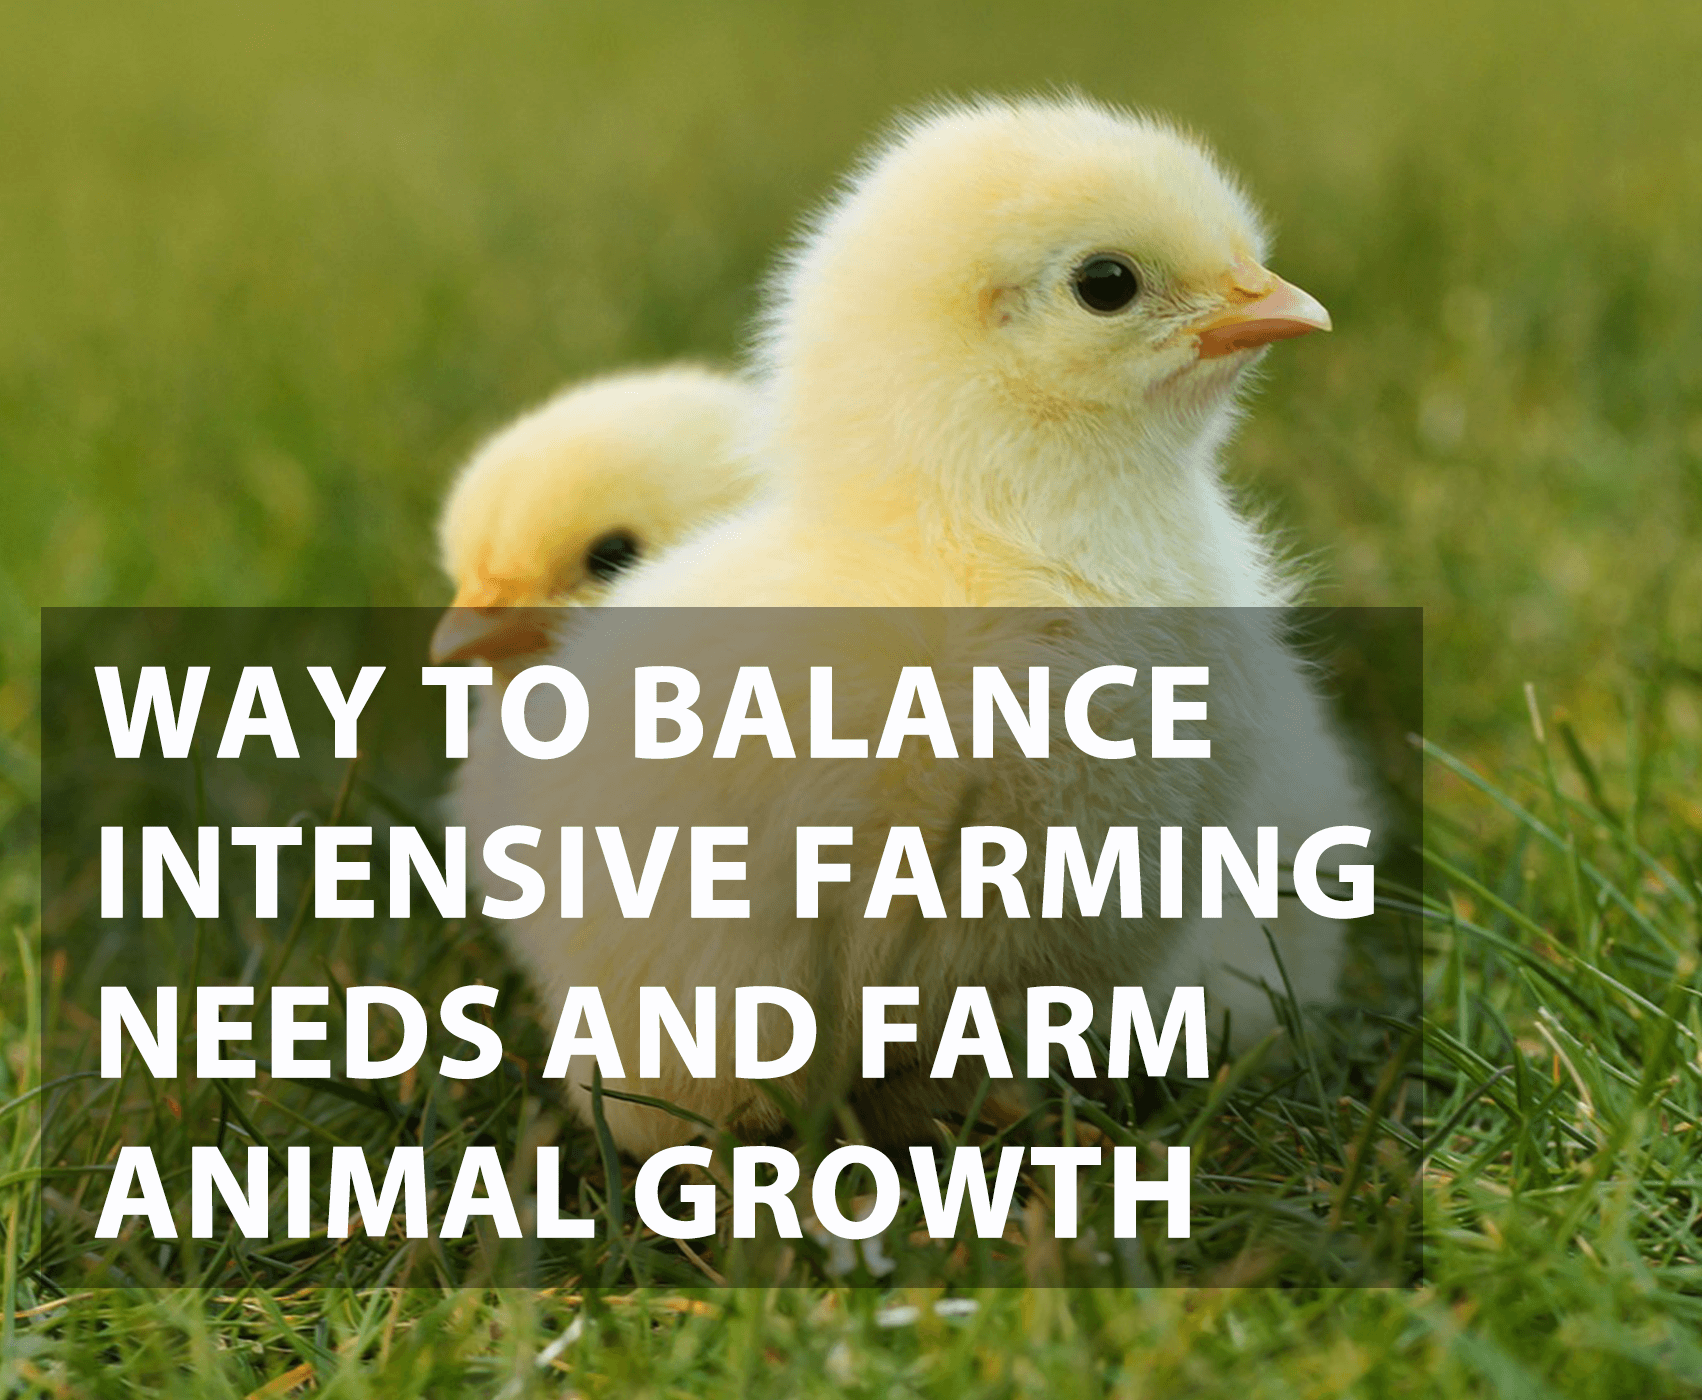 Way to Balance Intensive Farming Needs and Farm Animal Growth